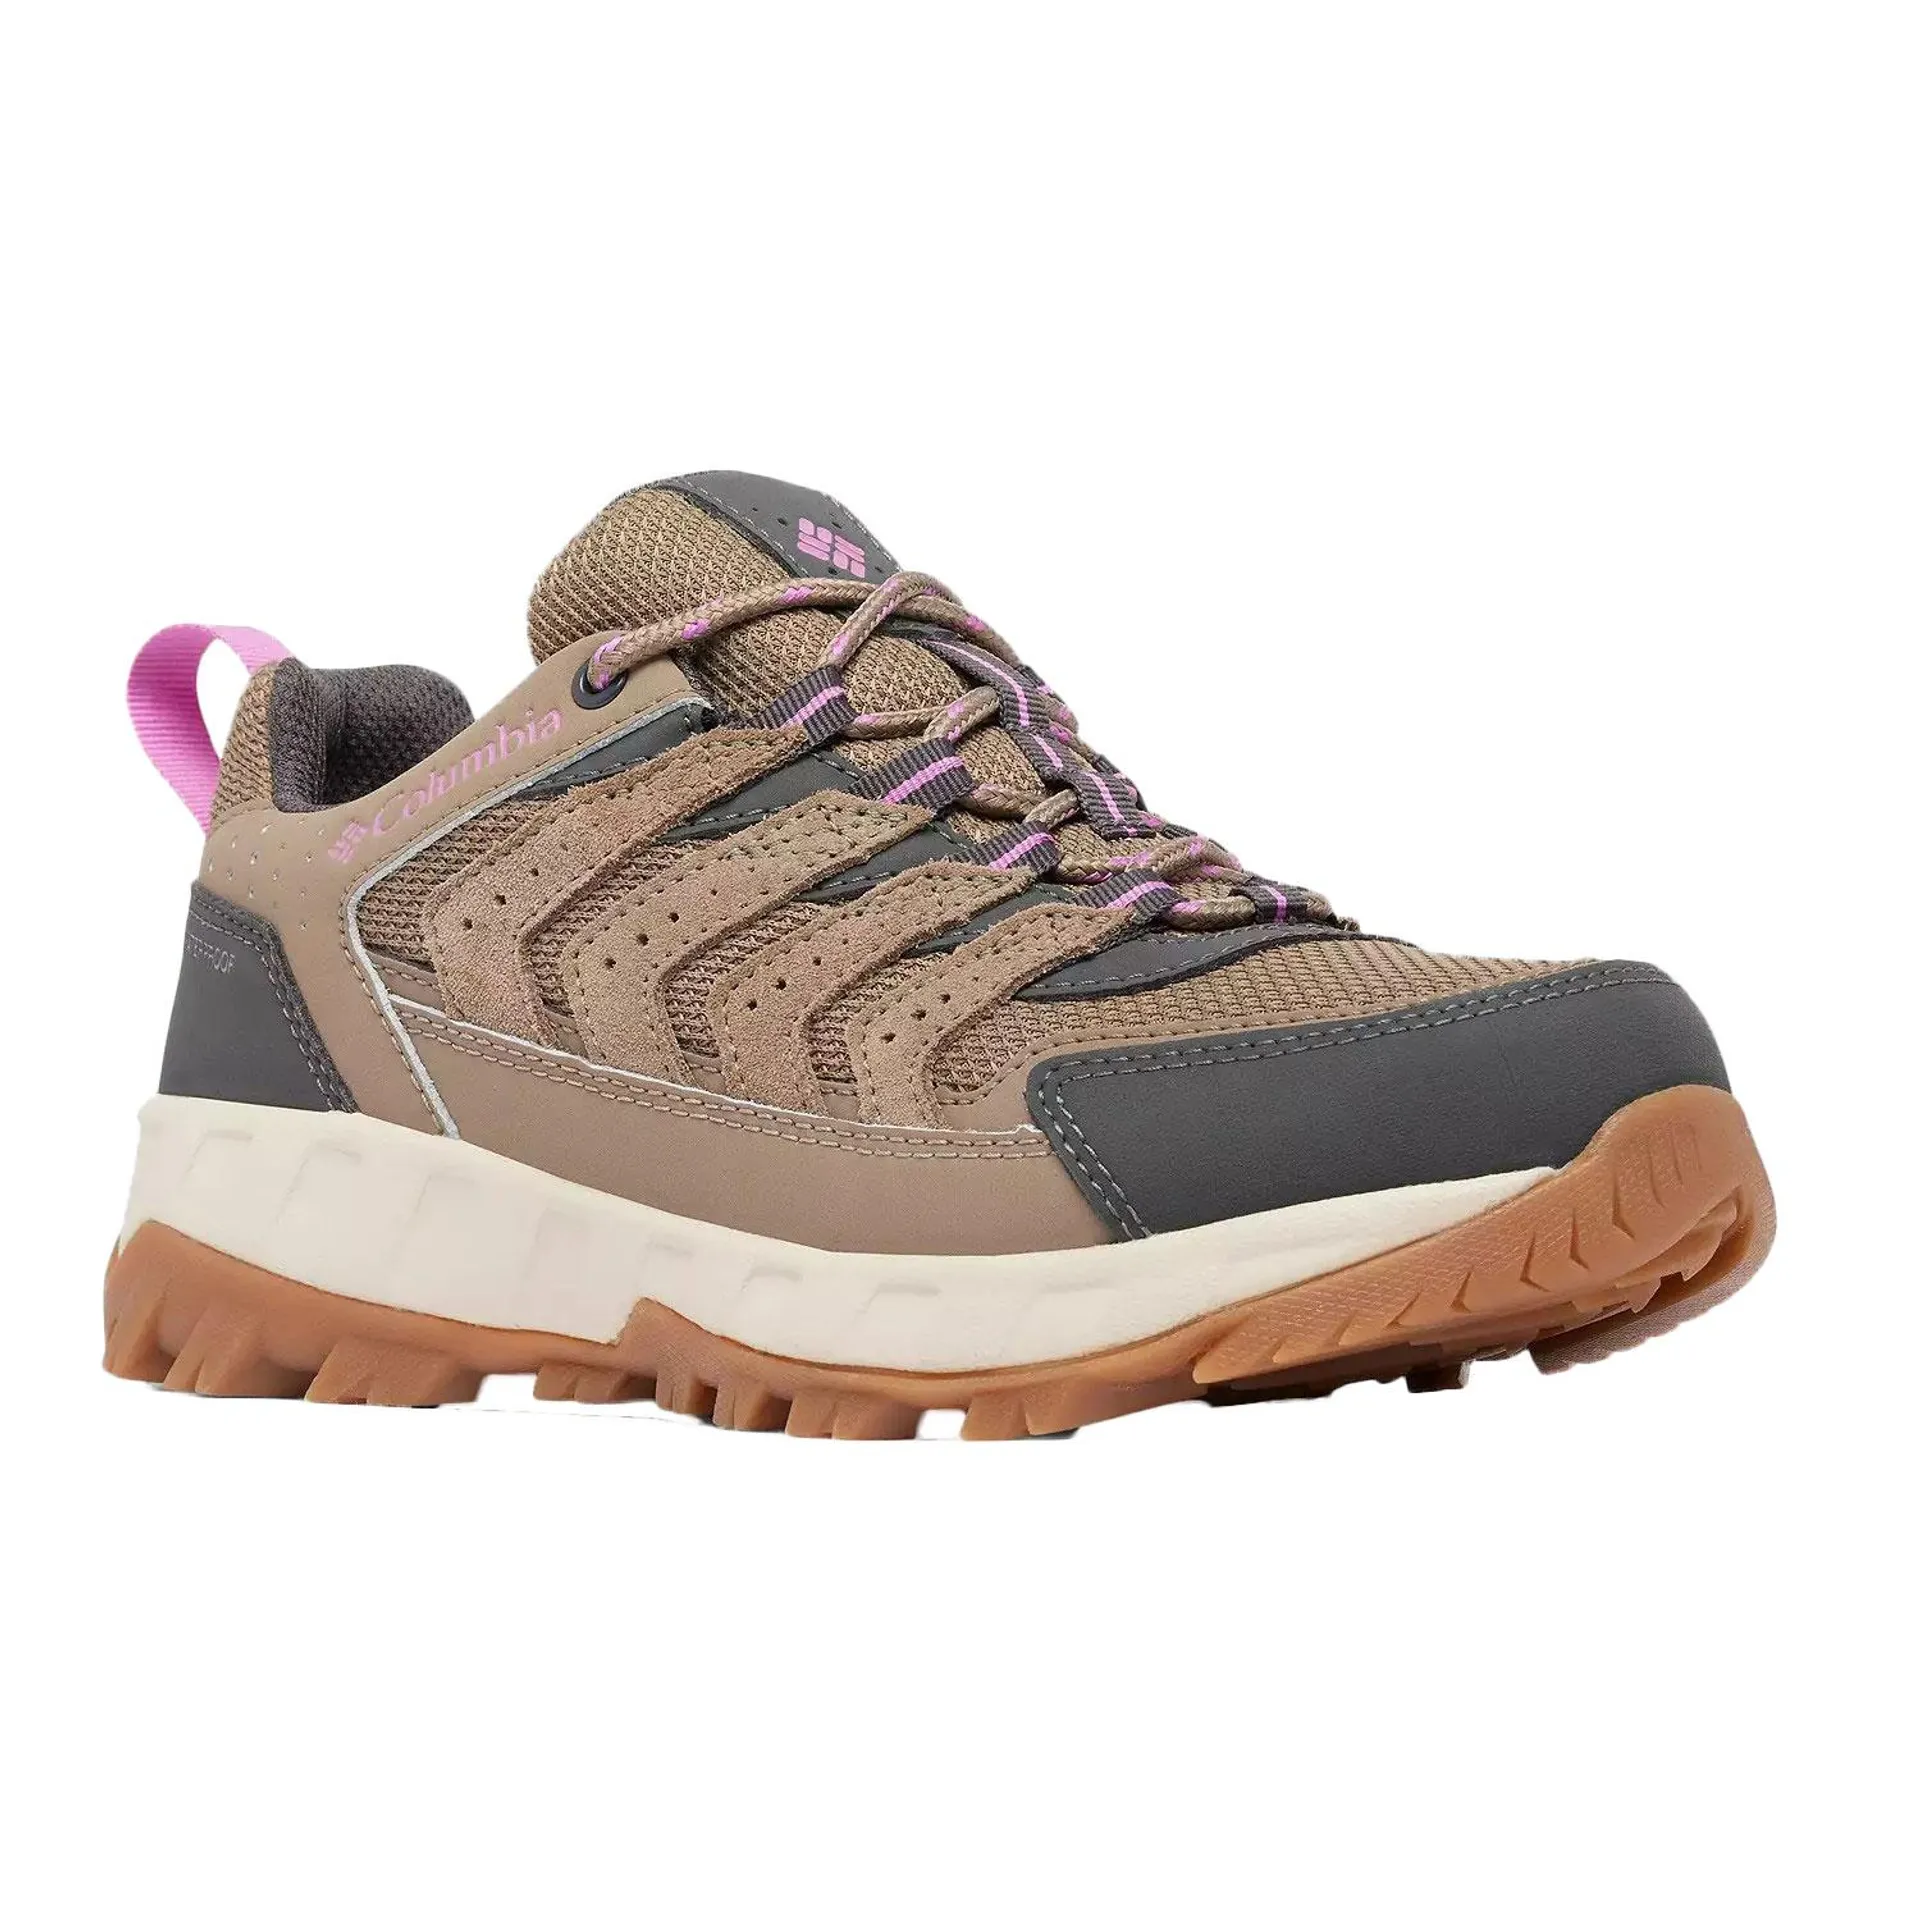 Columbia Strata Trail Low Waterproof Women's Hiking Shoes